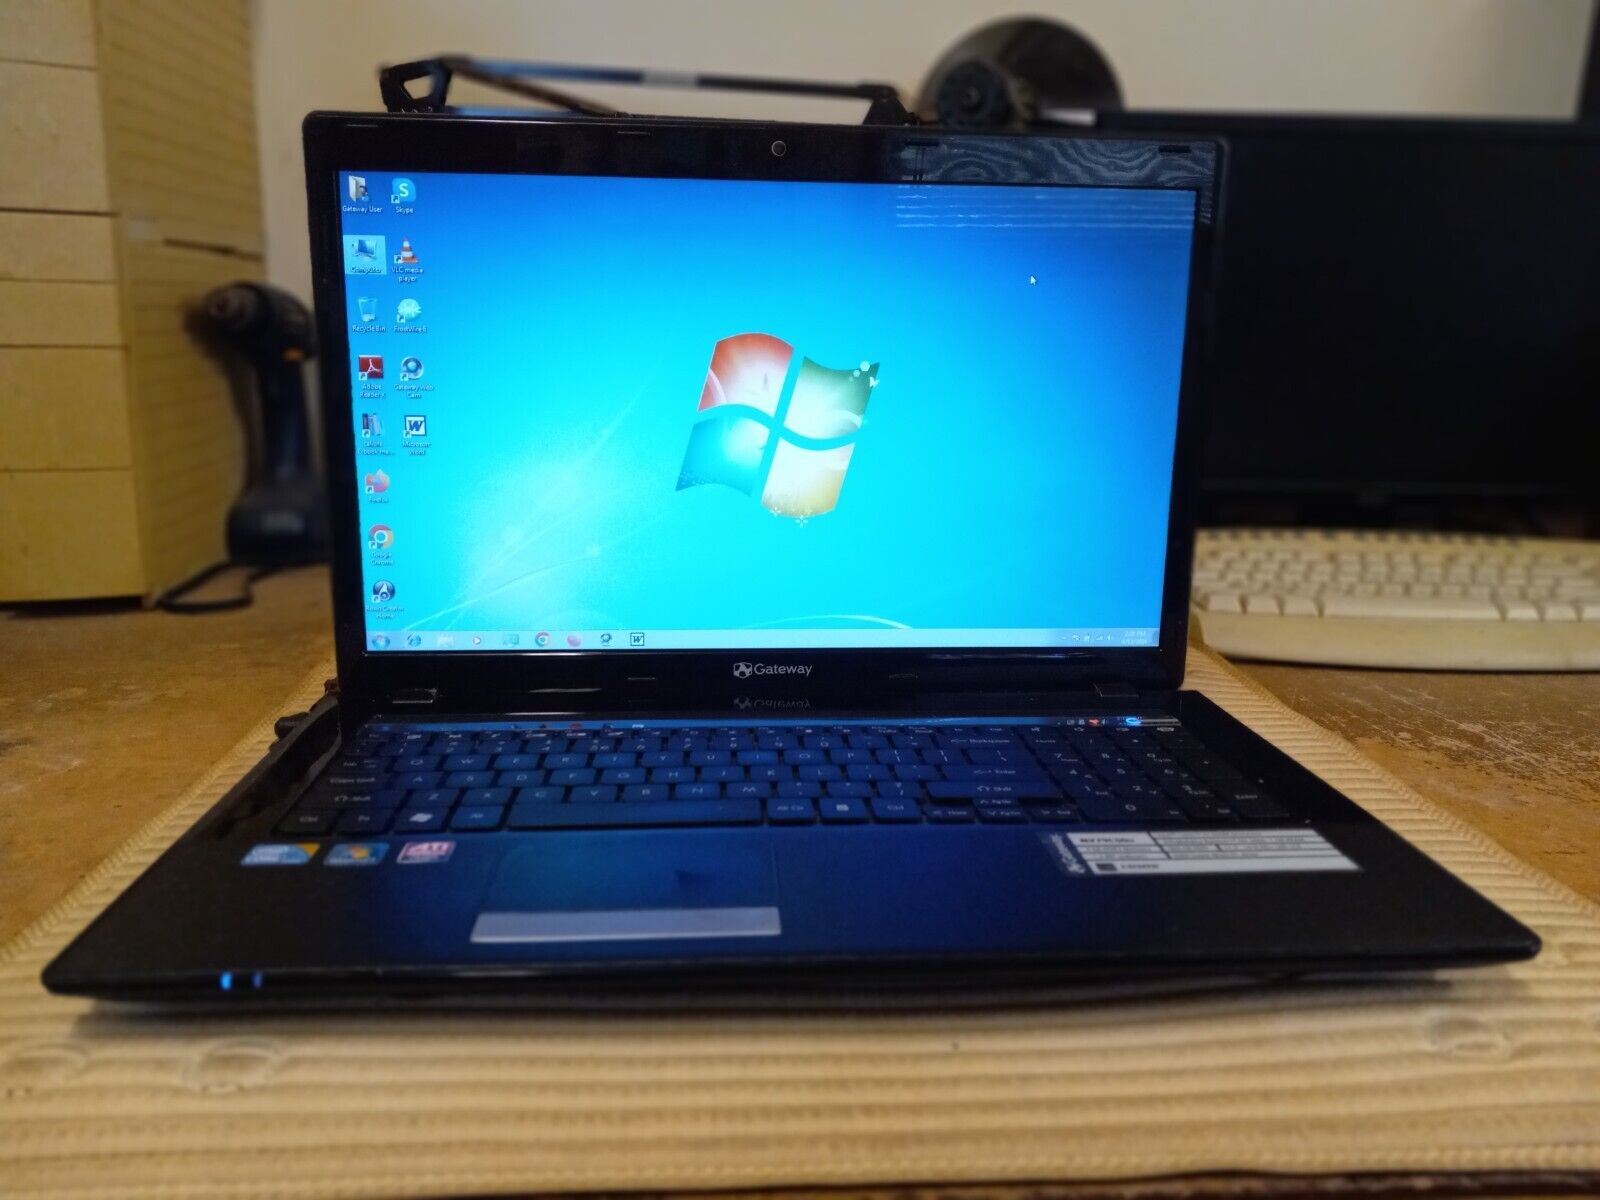 Gateway MS2288 NV79 Series Laptop Windows 7 Home premium